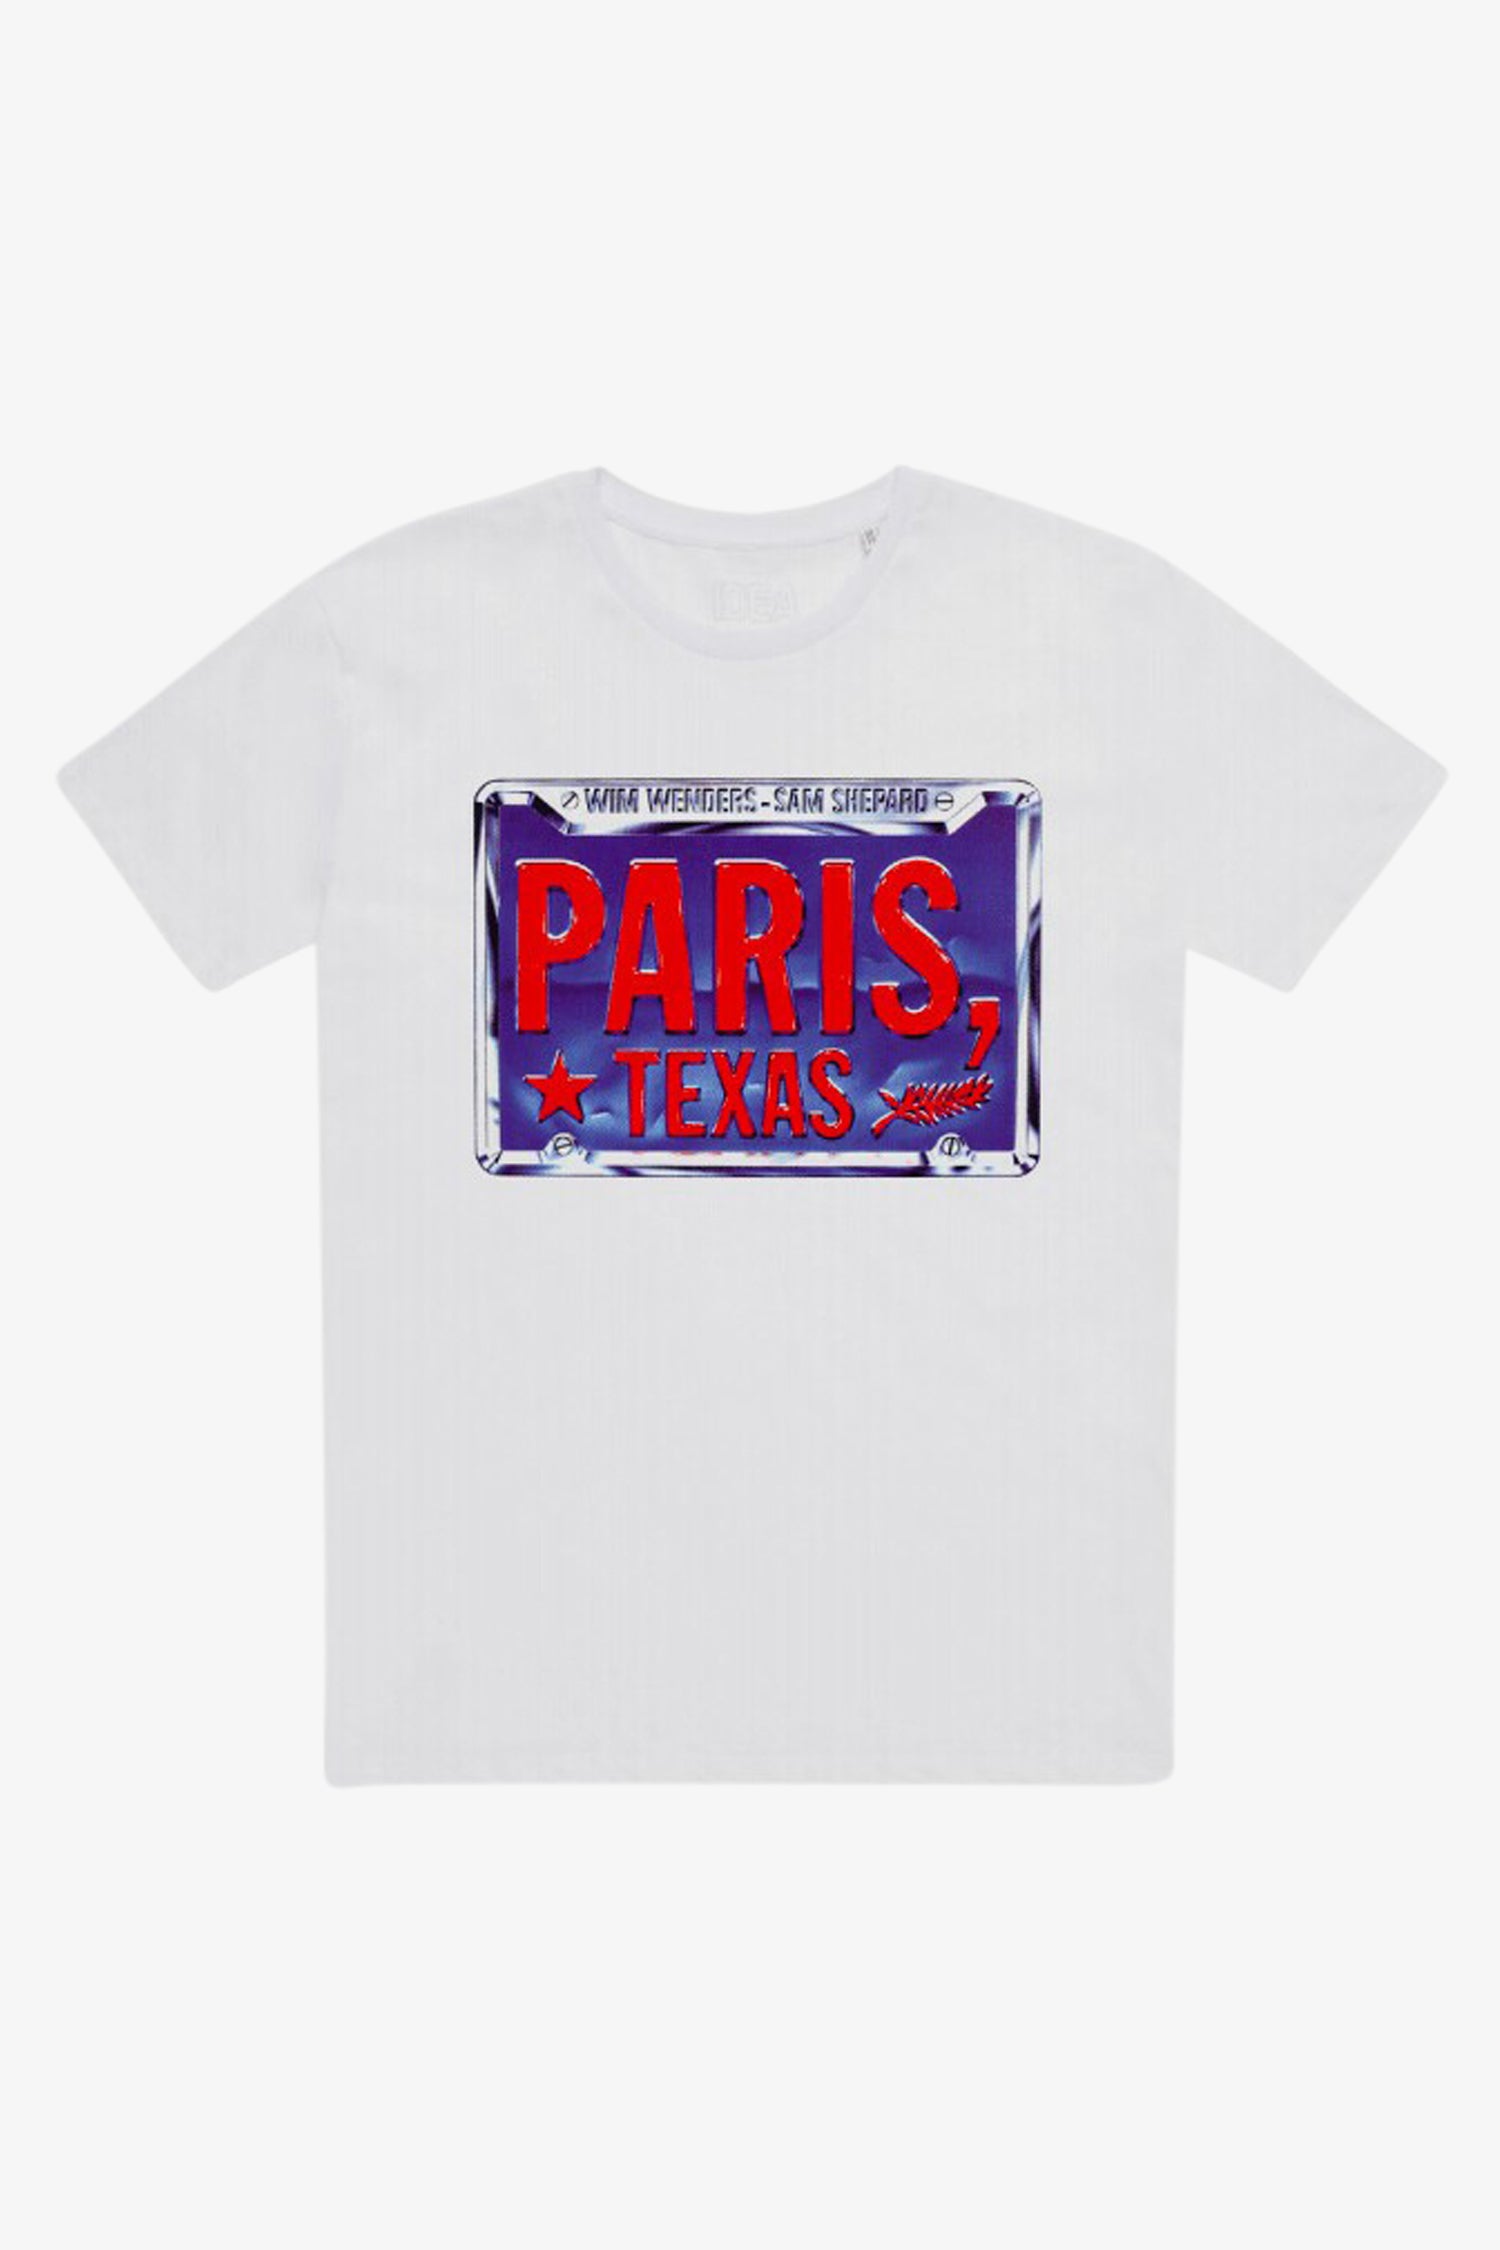 Selectshop FRAME - IDEA PARIS, TEXAS License Plate T-Shirt T-Shirt Dubai